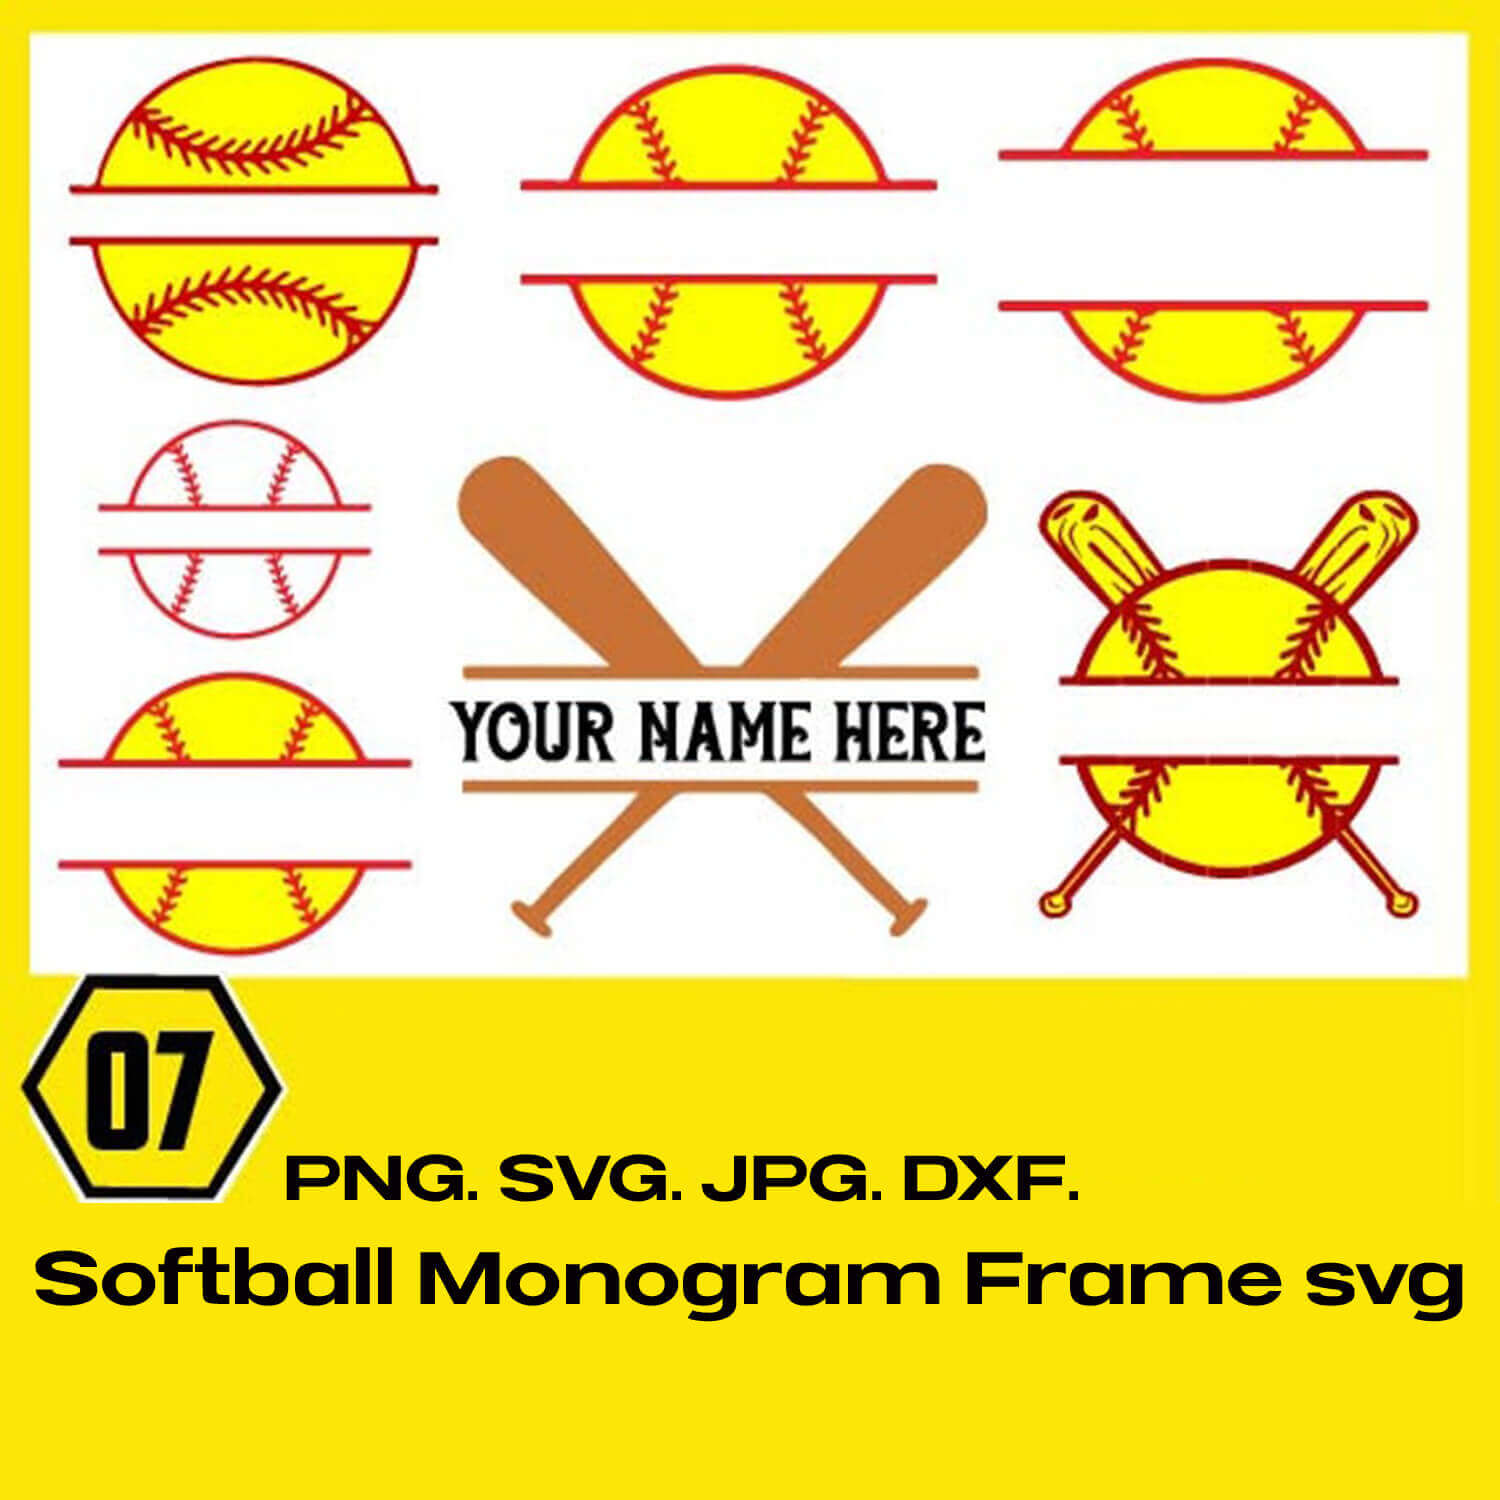 Many frames for inscription of softball monogram frame svg.